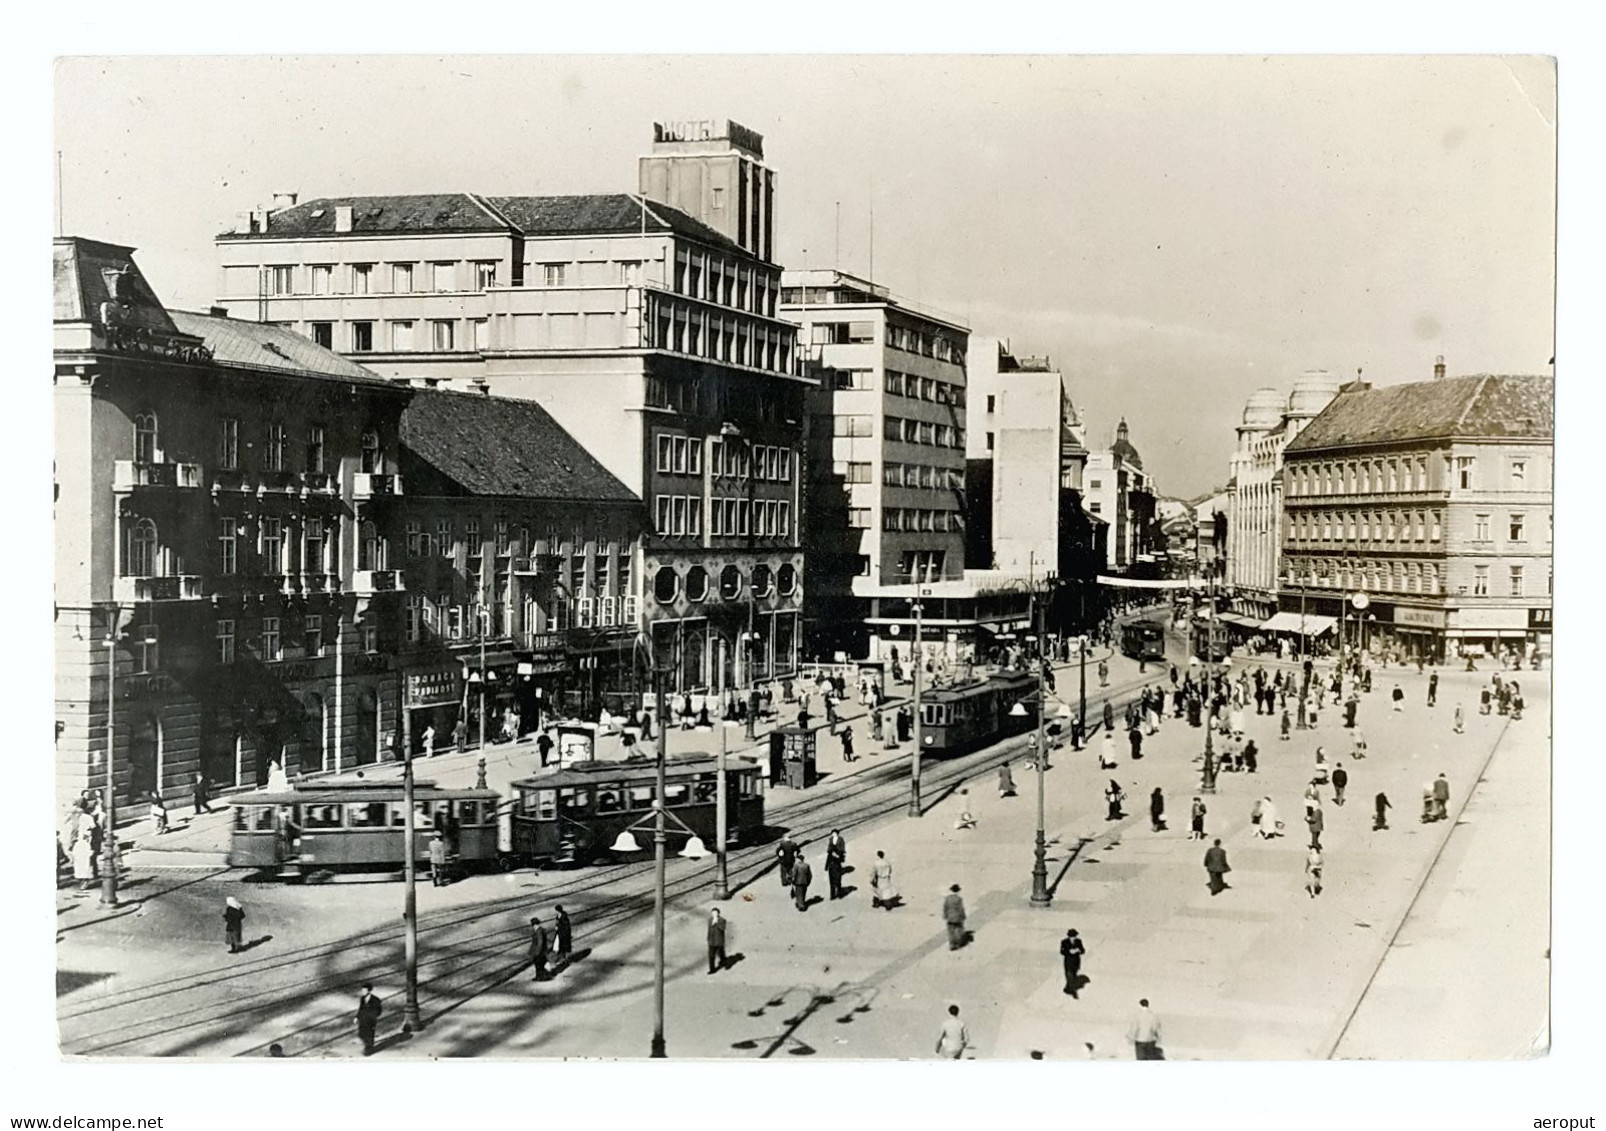 1957 Zagreb / Croatia / Trg Republike - Fotograf Đ. Griesbach - Real Photo (RPPC) - Croatia